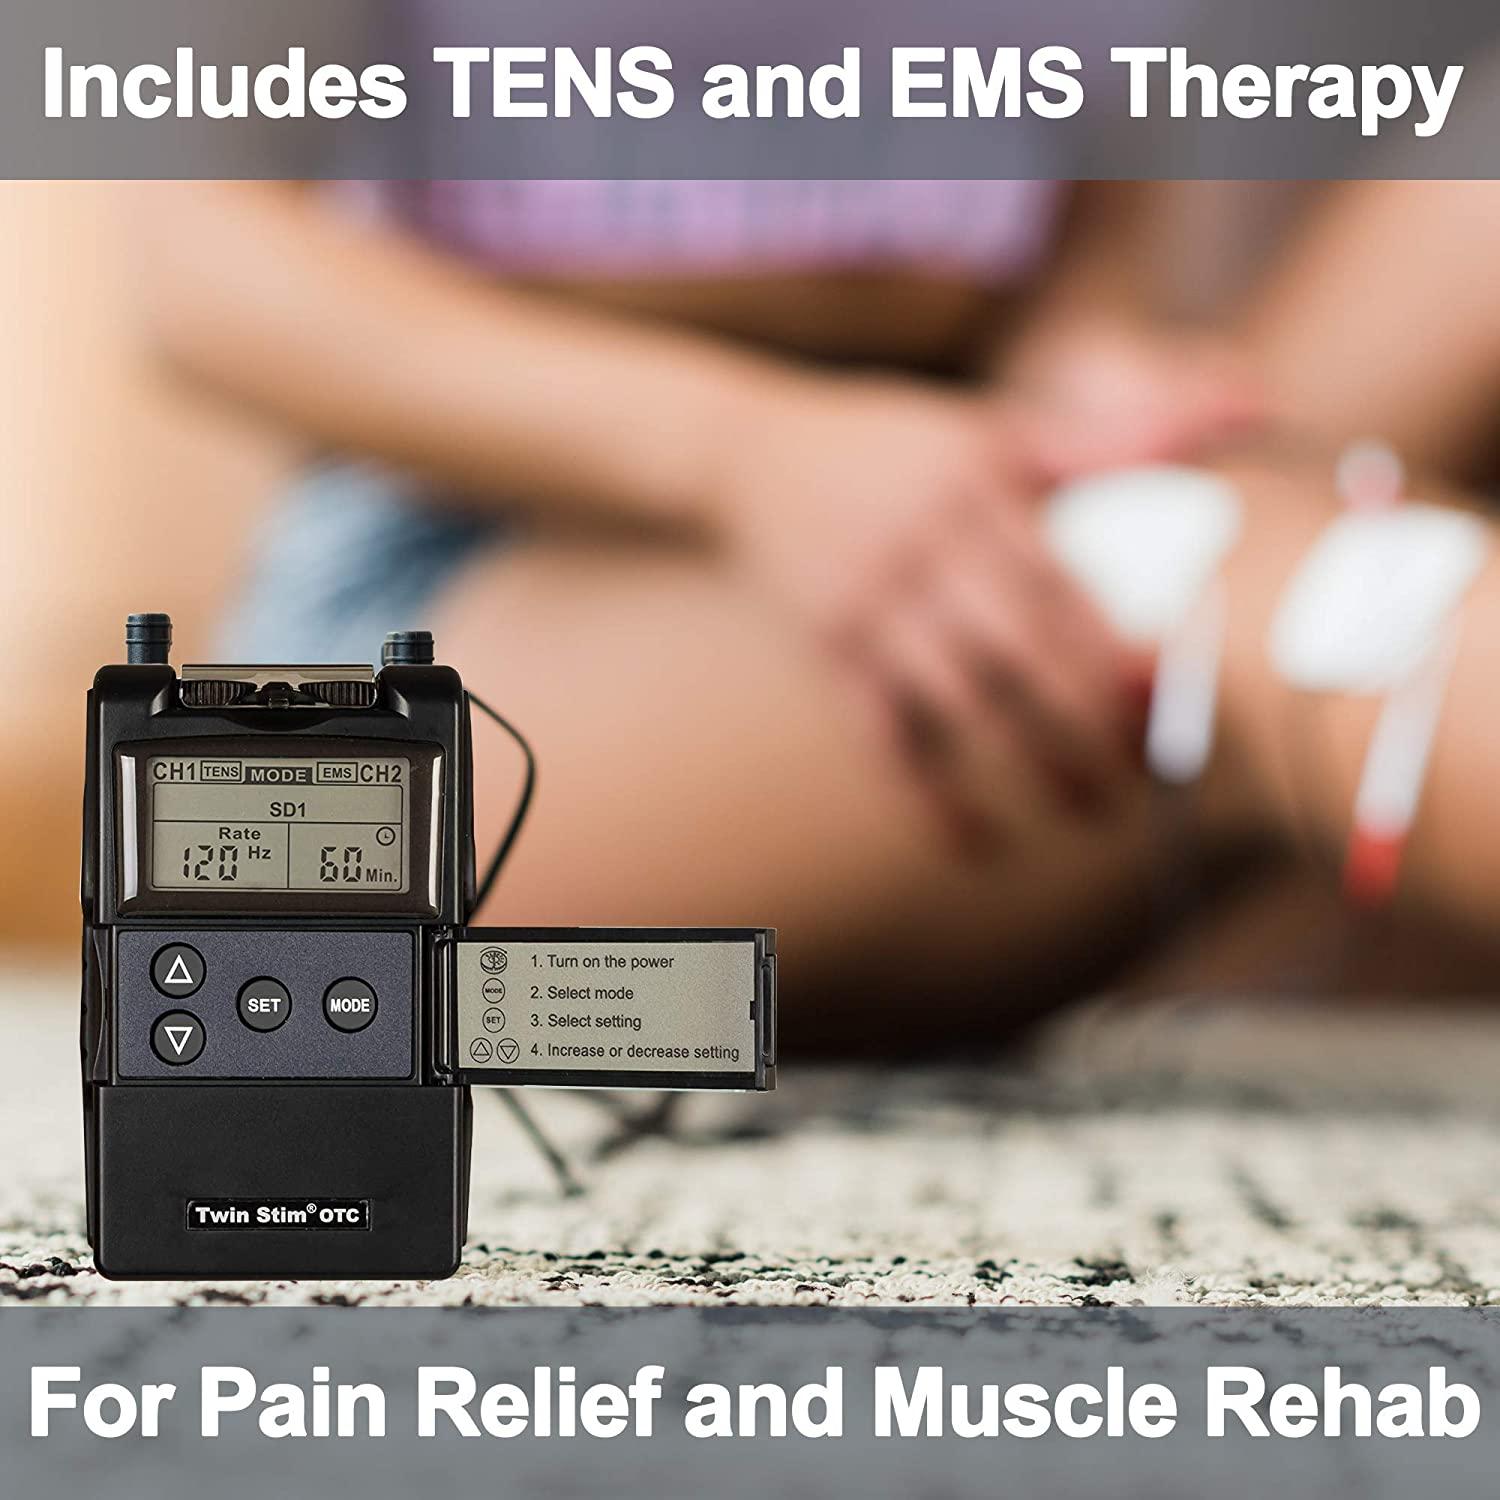 Tens Unit Therapy for Sciatica Pain